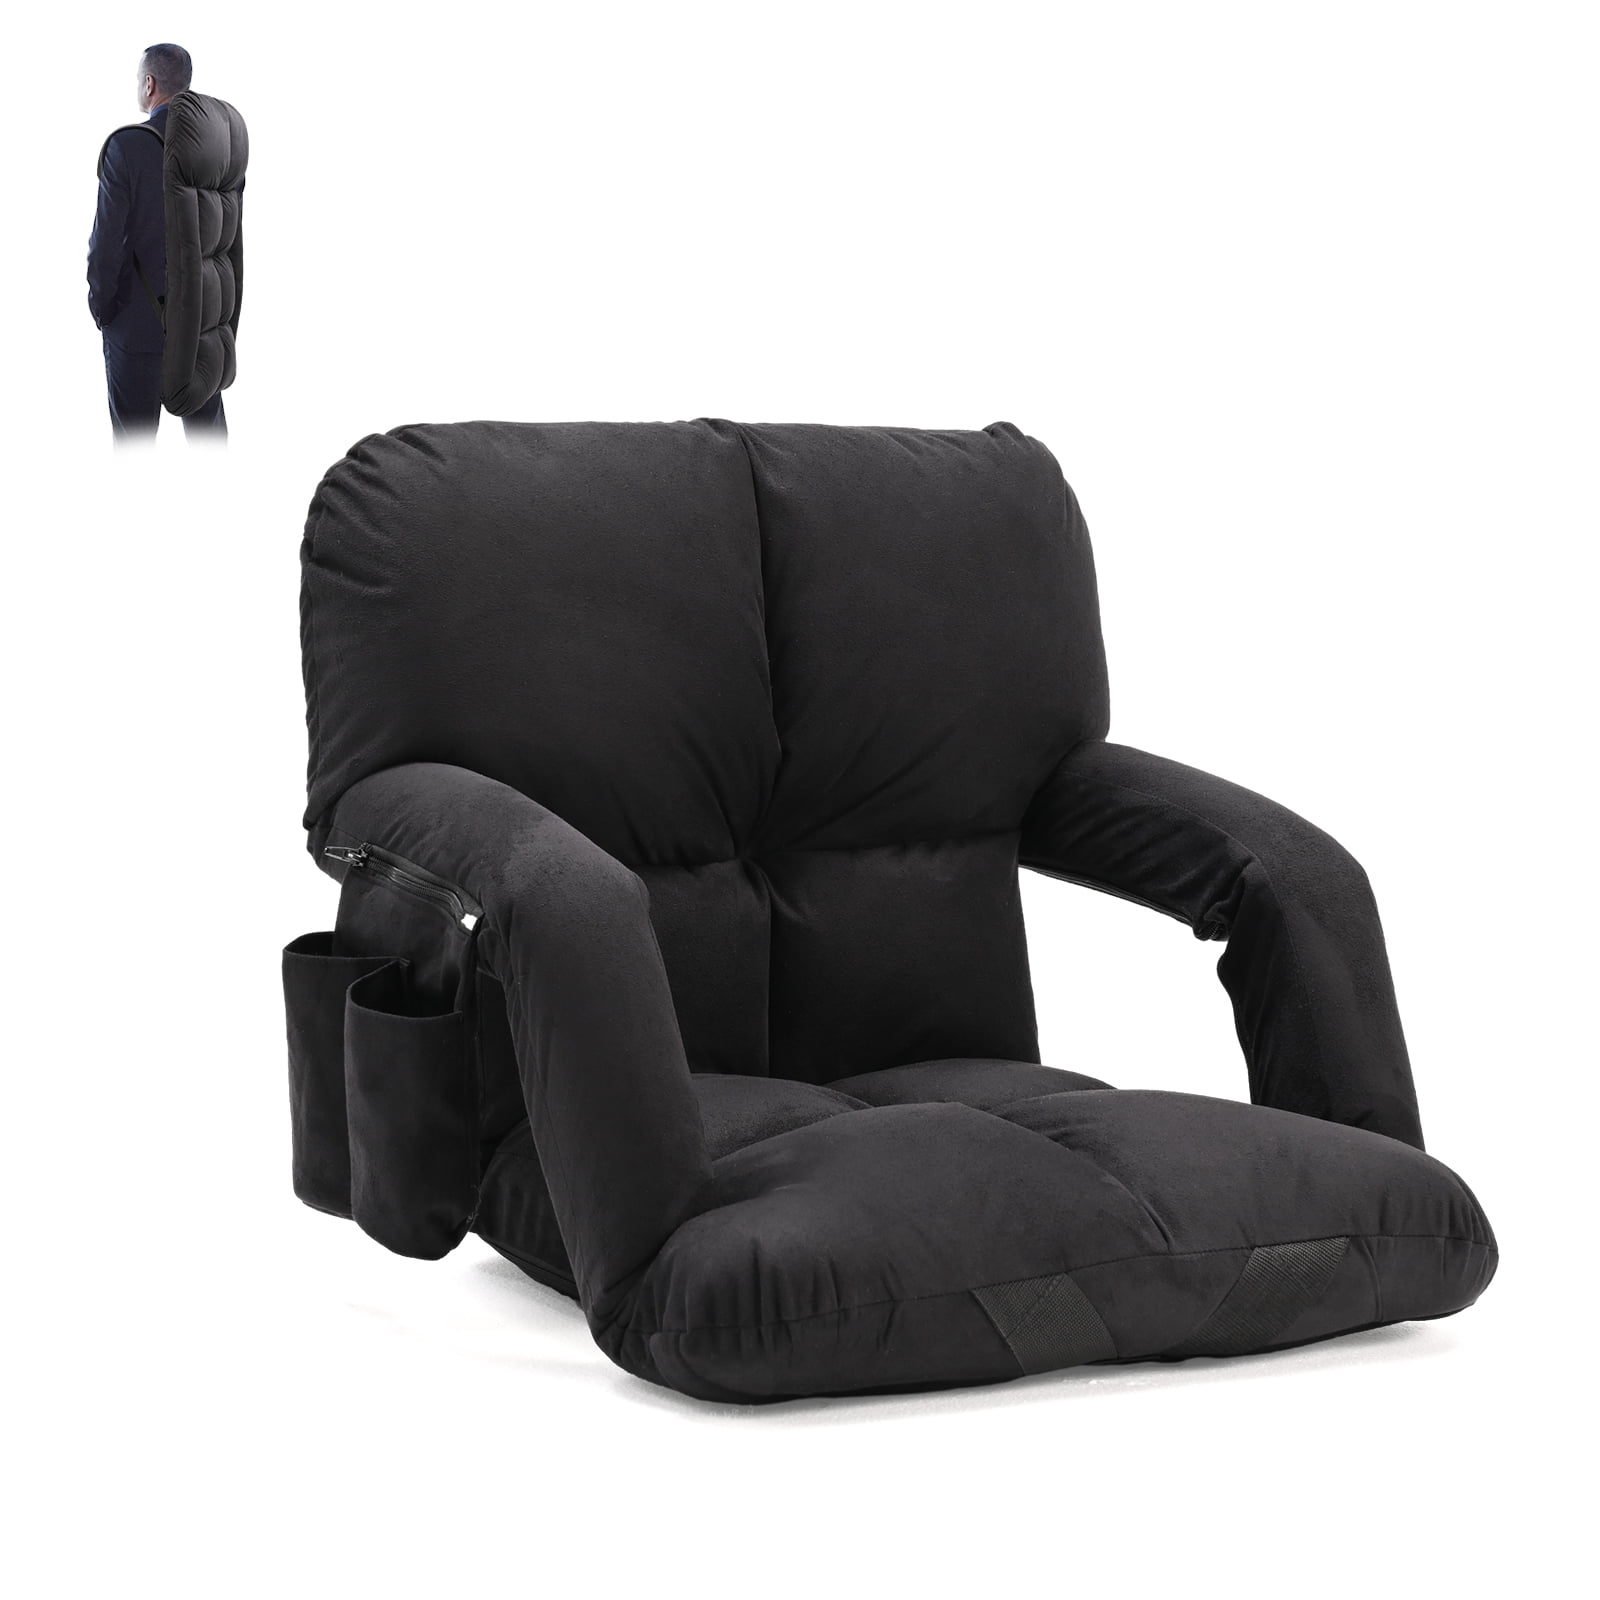 Portable Adjustable Stadium Seat Cushion - BAS059 - IdeaStage Promotional  Products